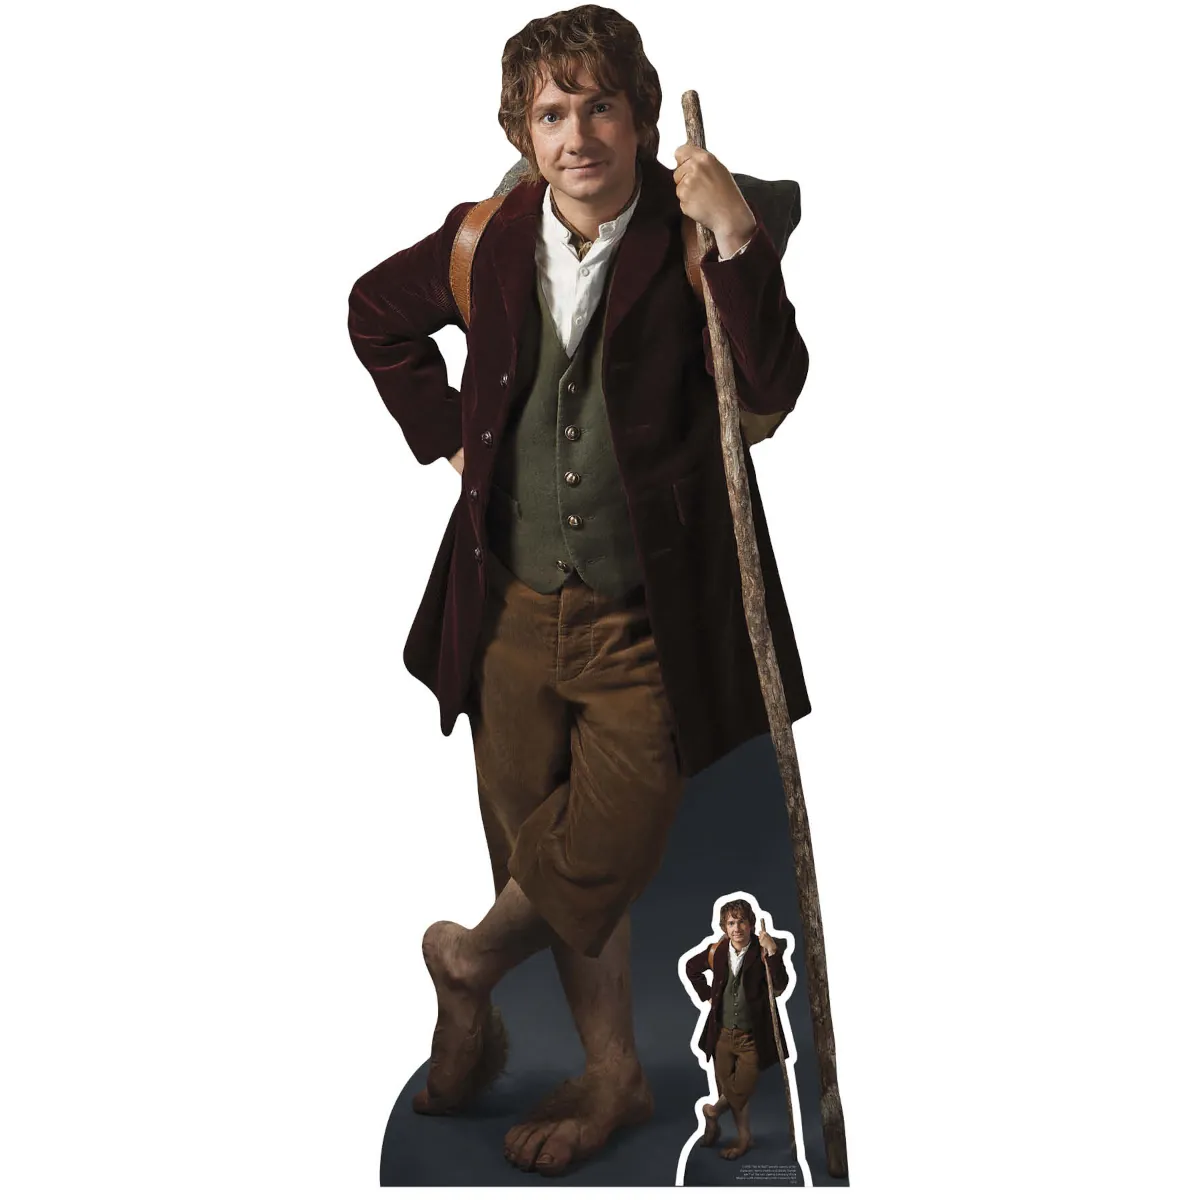 SC4138 Bilbo Baggins (The Hobbit) Official Lifesize + Mini Cardboard Cutout Standee Front